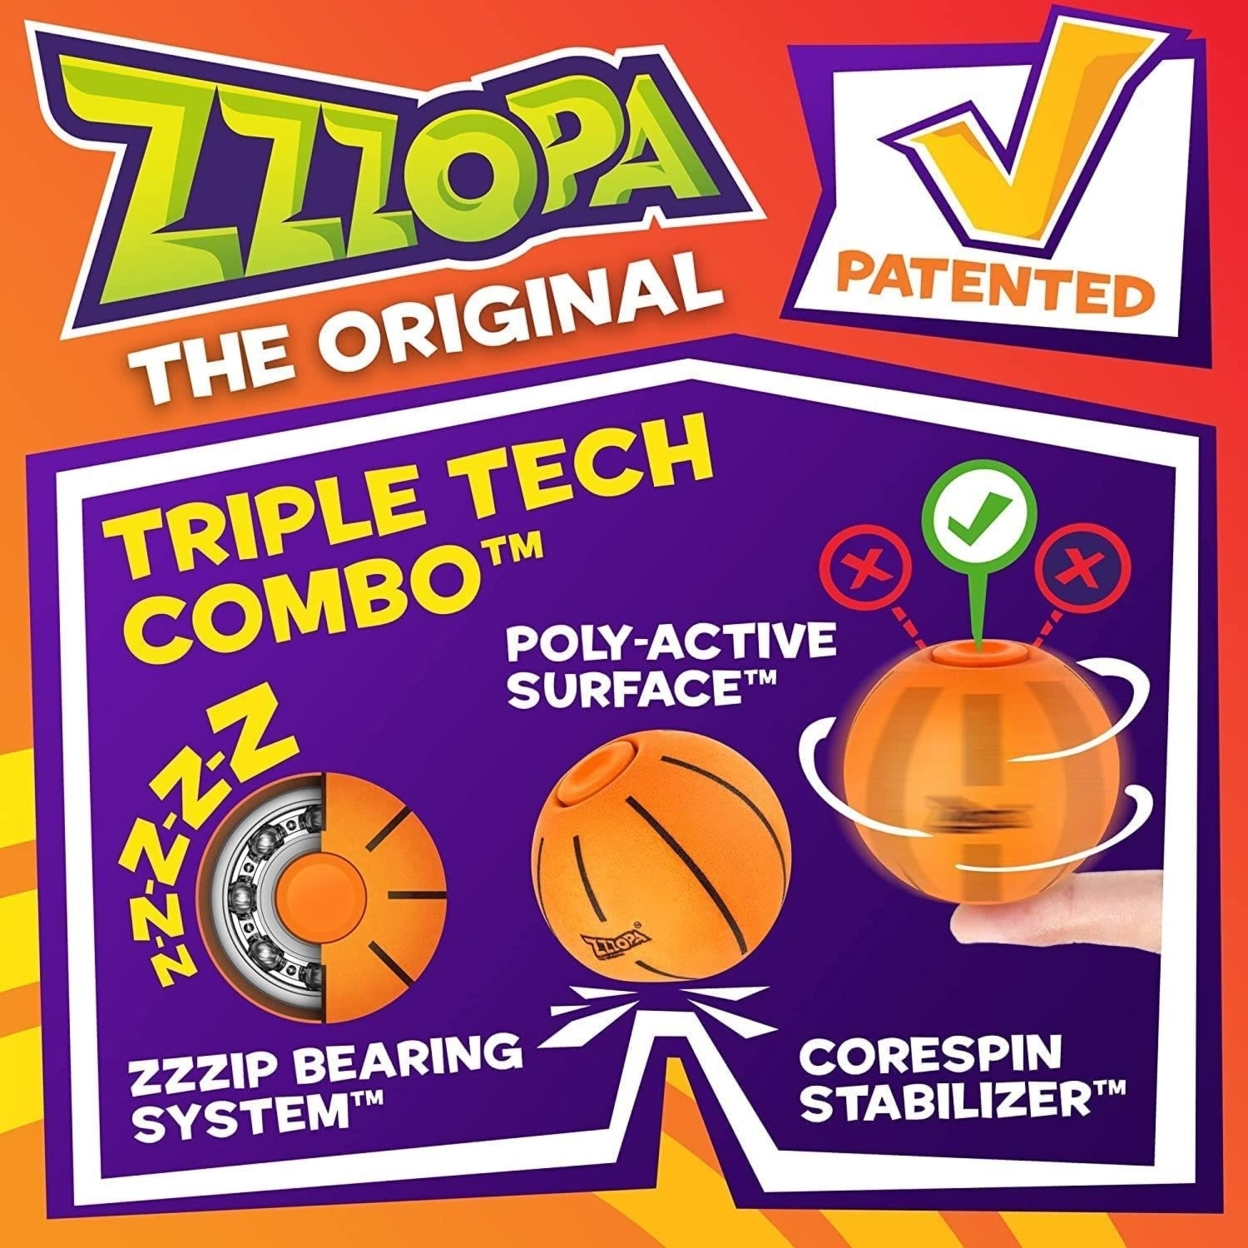 Original ZZZOPA Fidget Stress Ball Variety 5pk Spin Bounce Throw It! Bundle PMI International